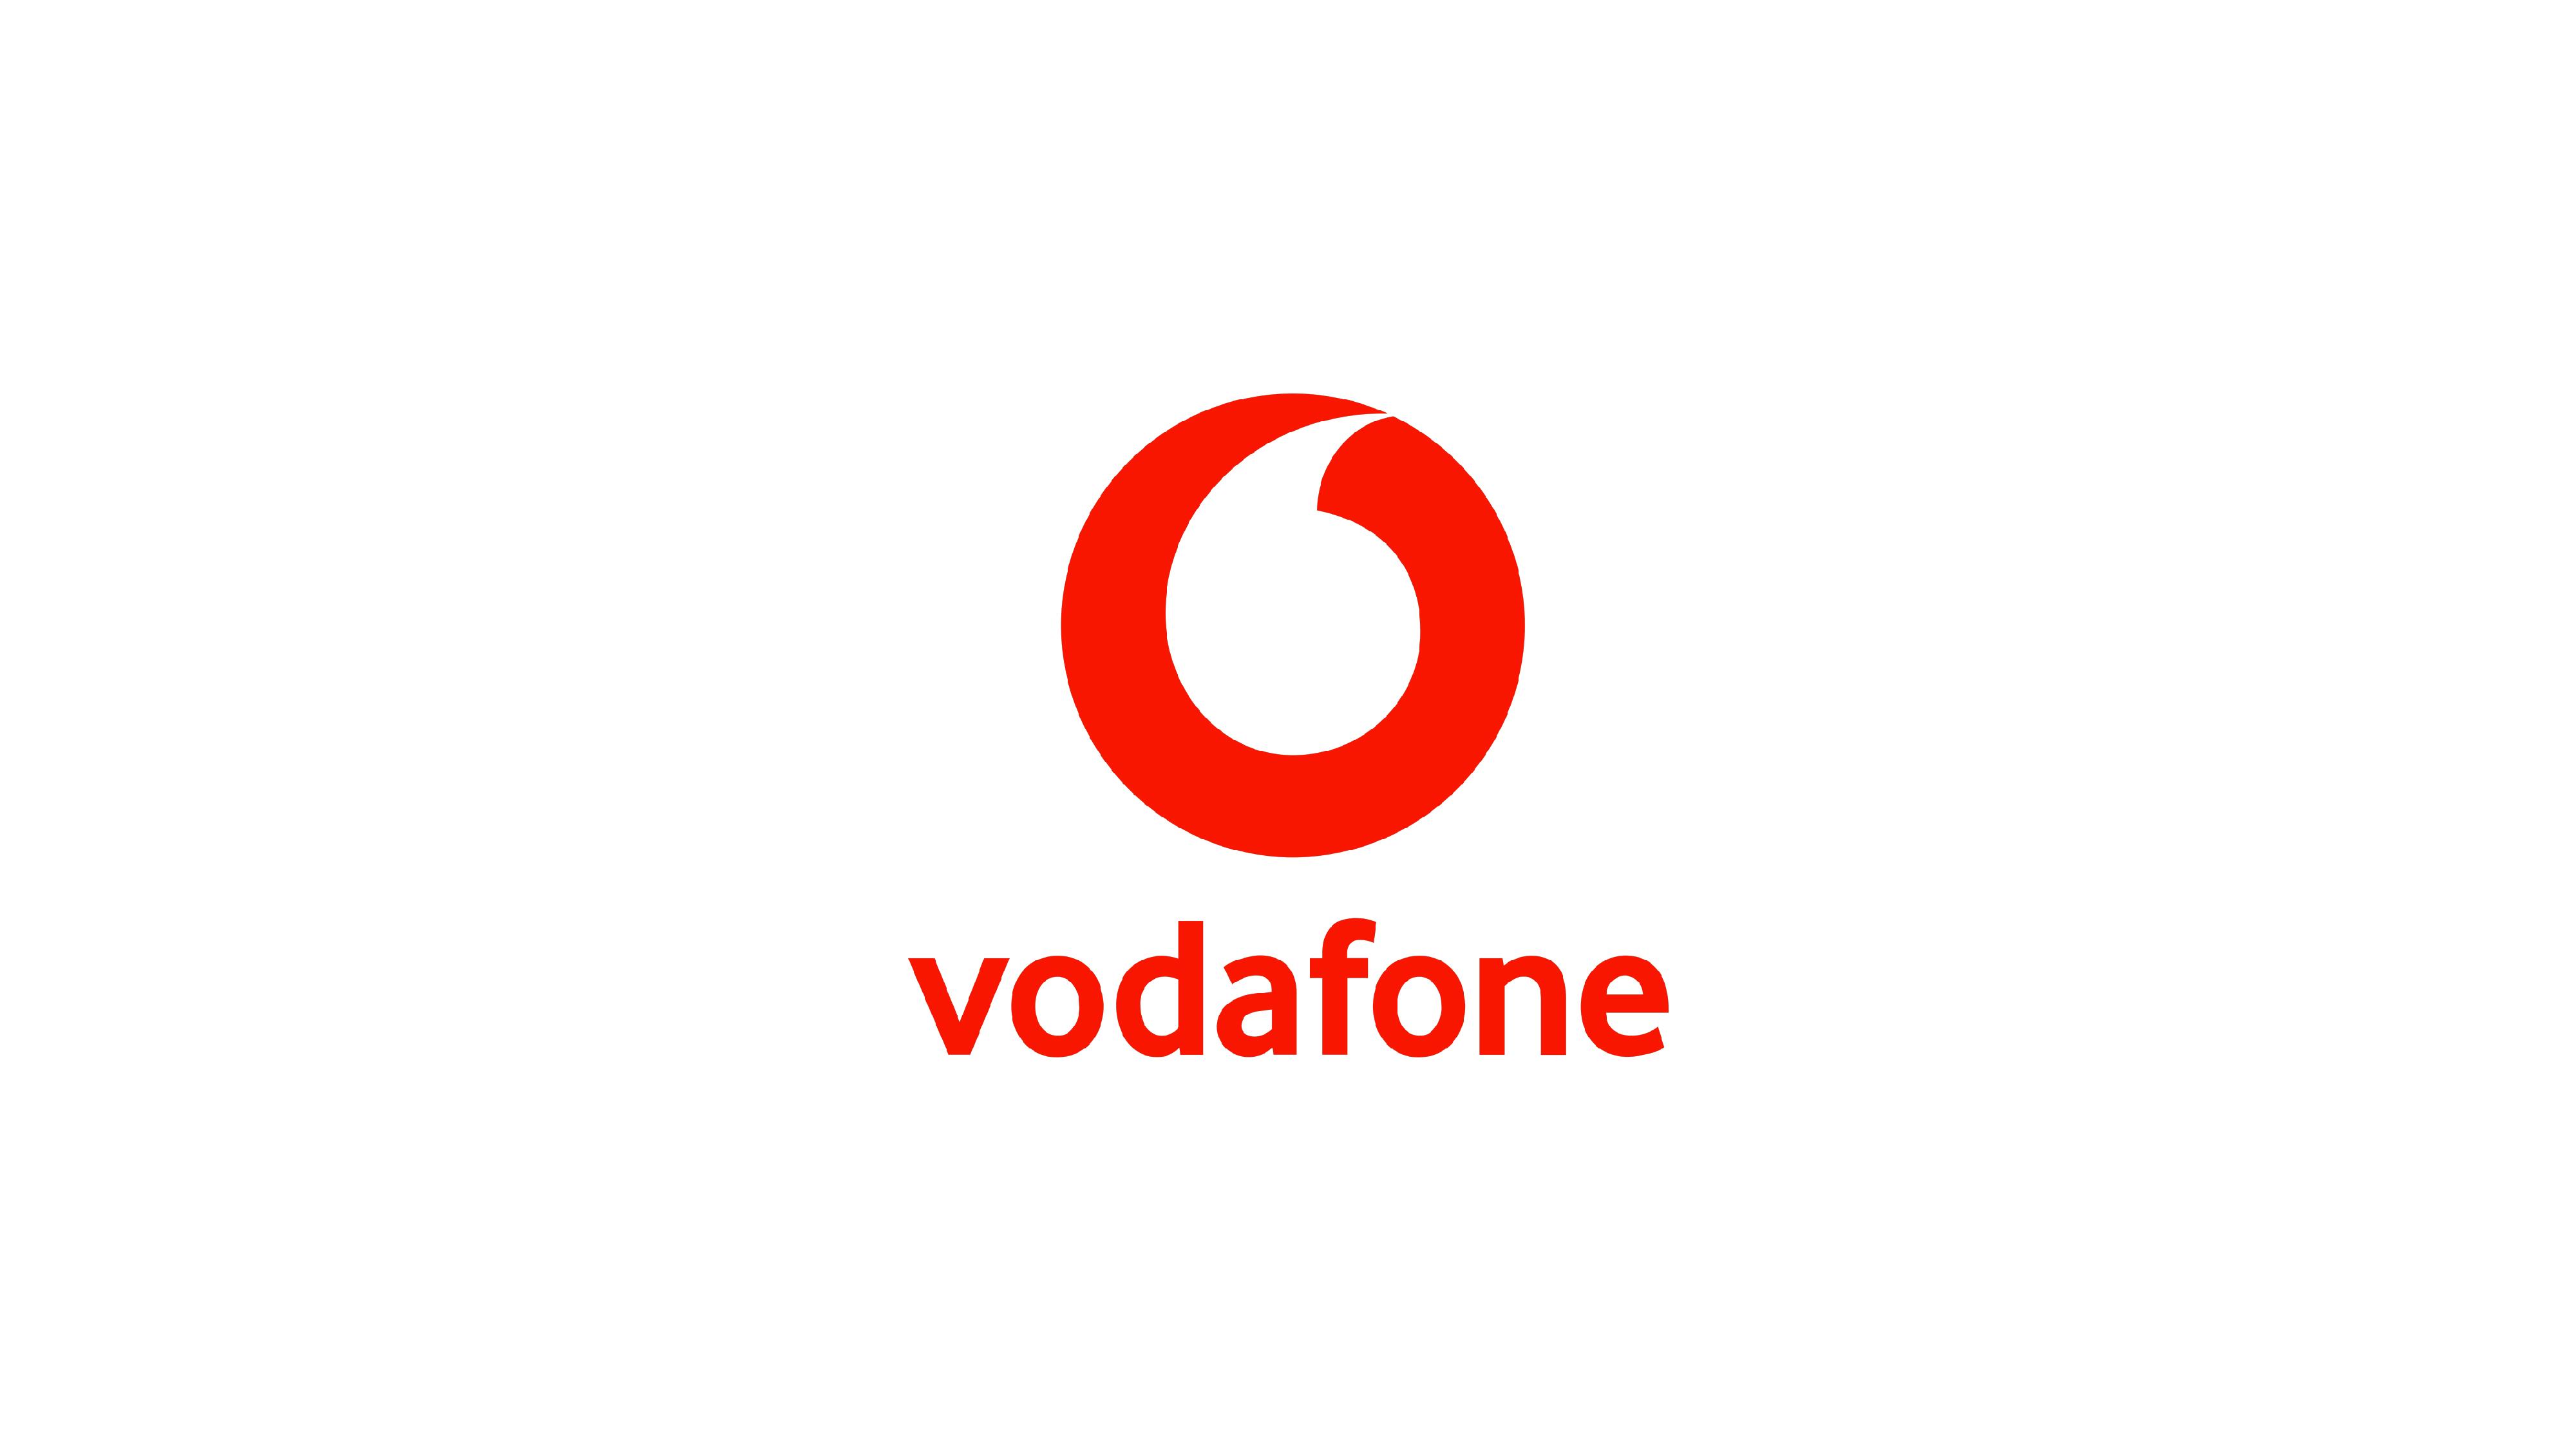 Vodafone logo 2017 01w. H. Y. Brandconsultancy